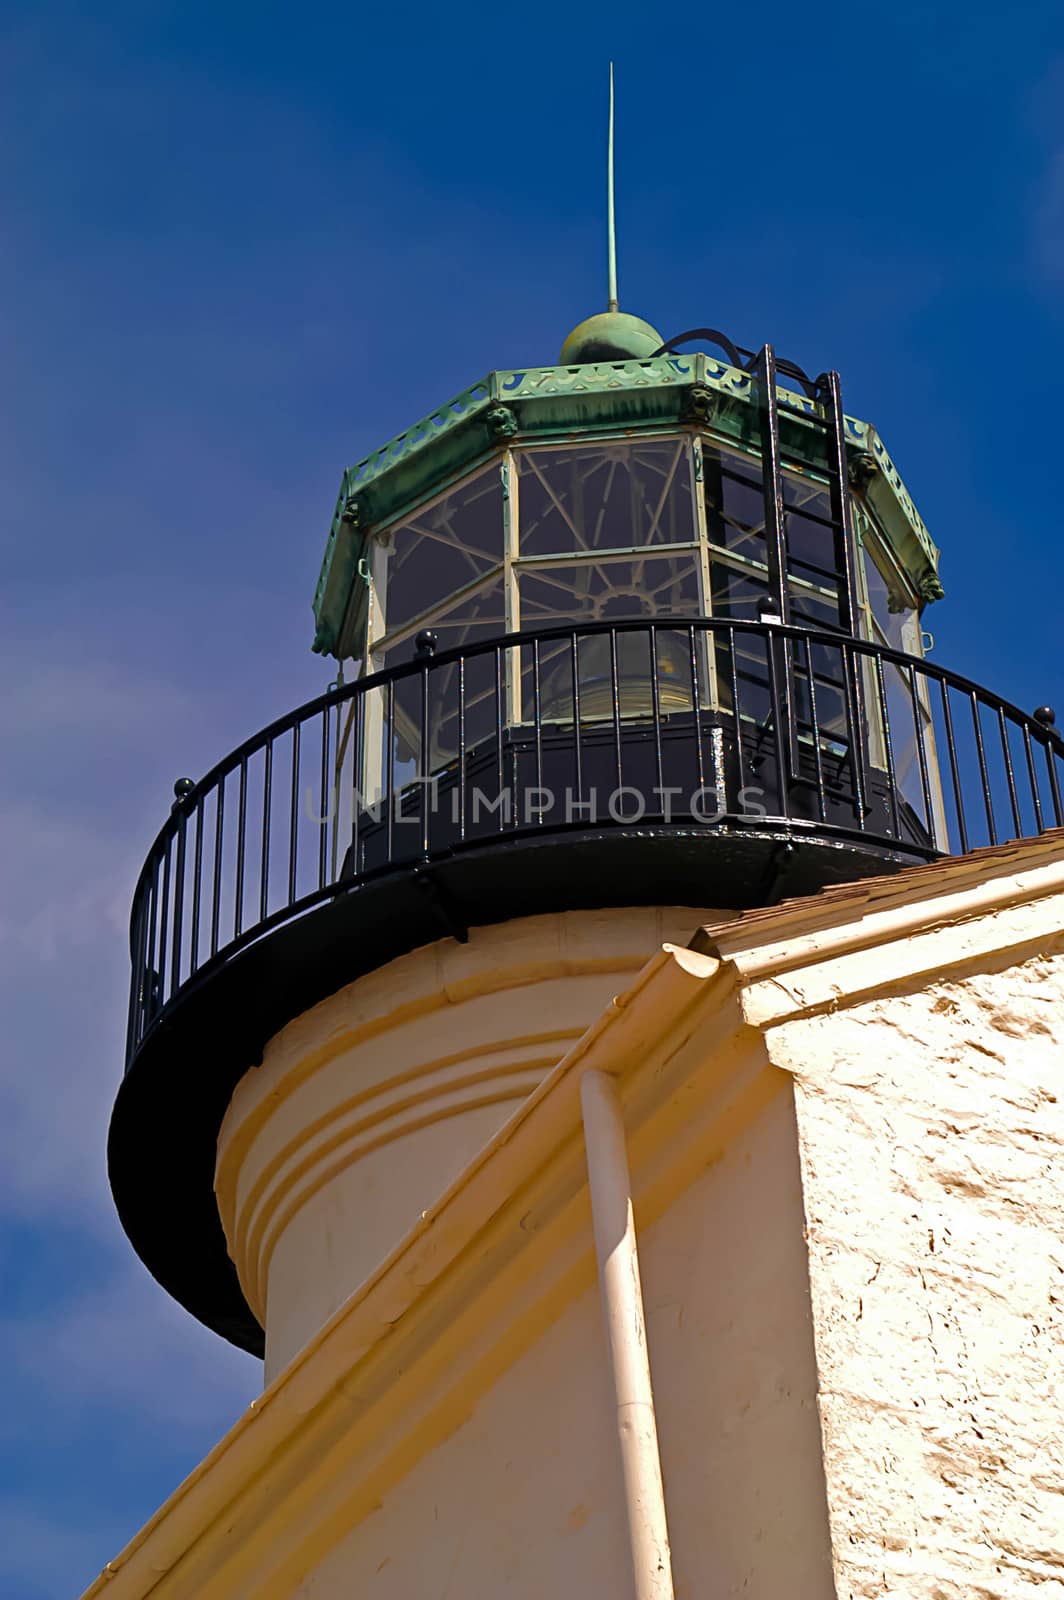 Pt Loma Lighthouse by cestes001